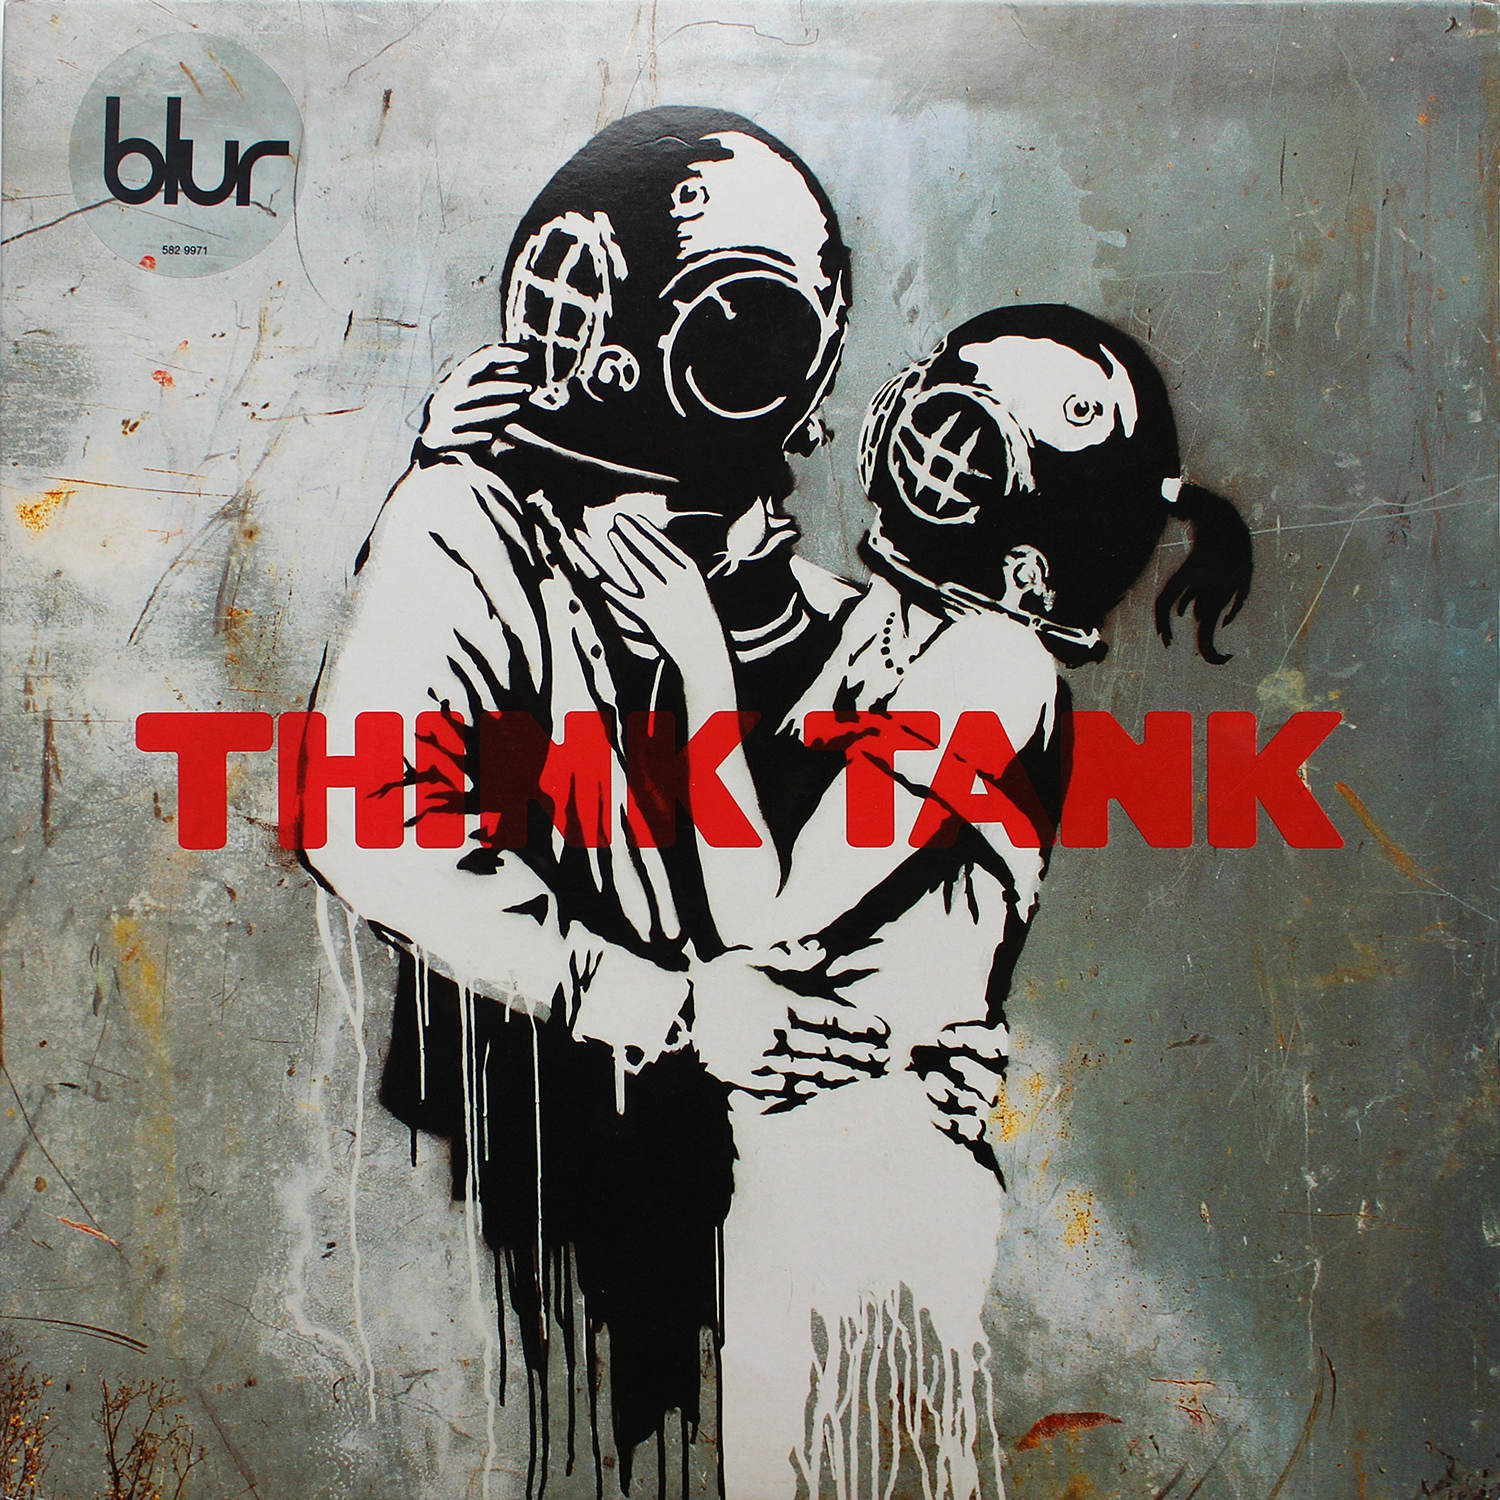 Think Tank Blur, Banksy Graphic Design